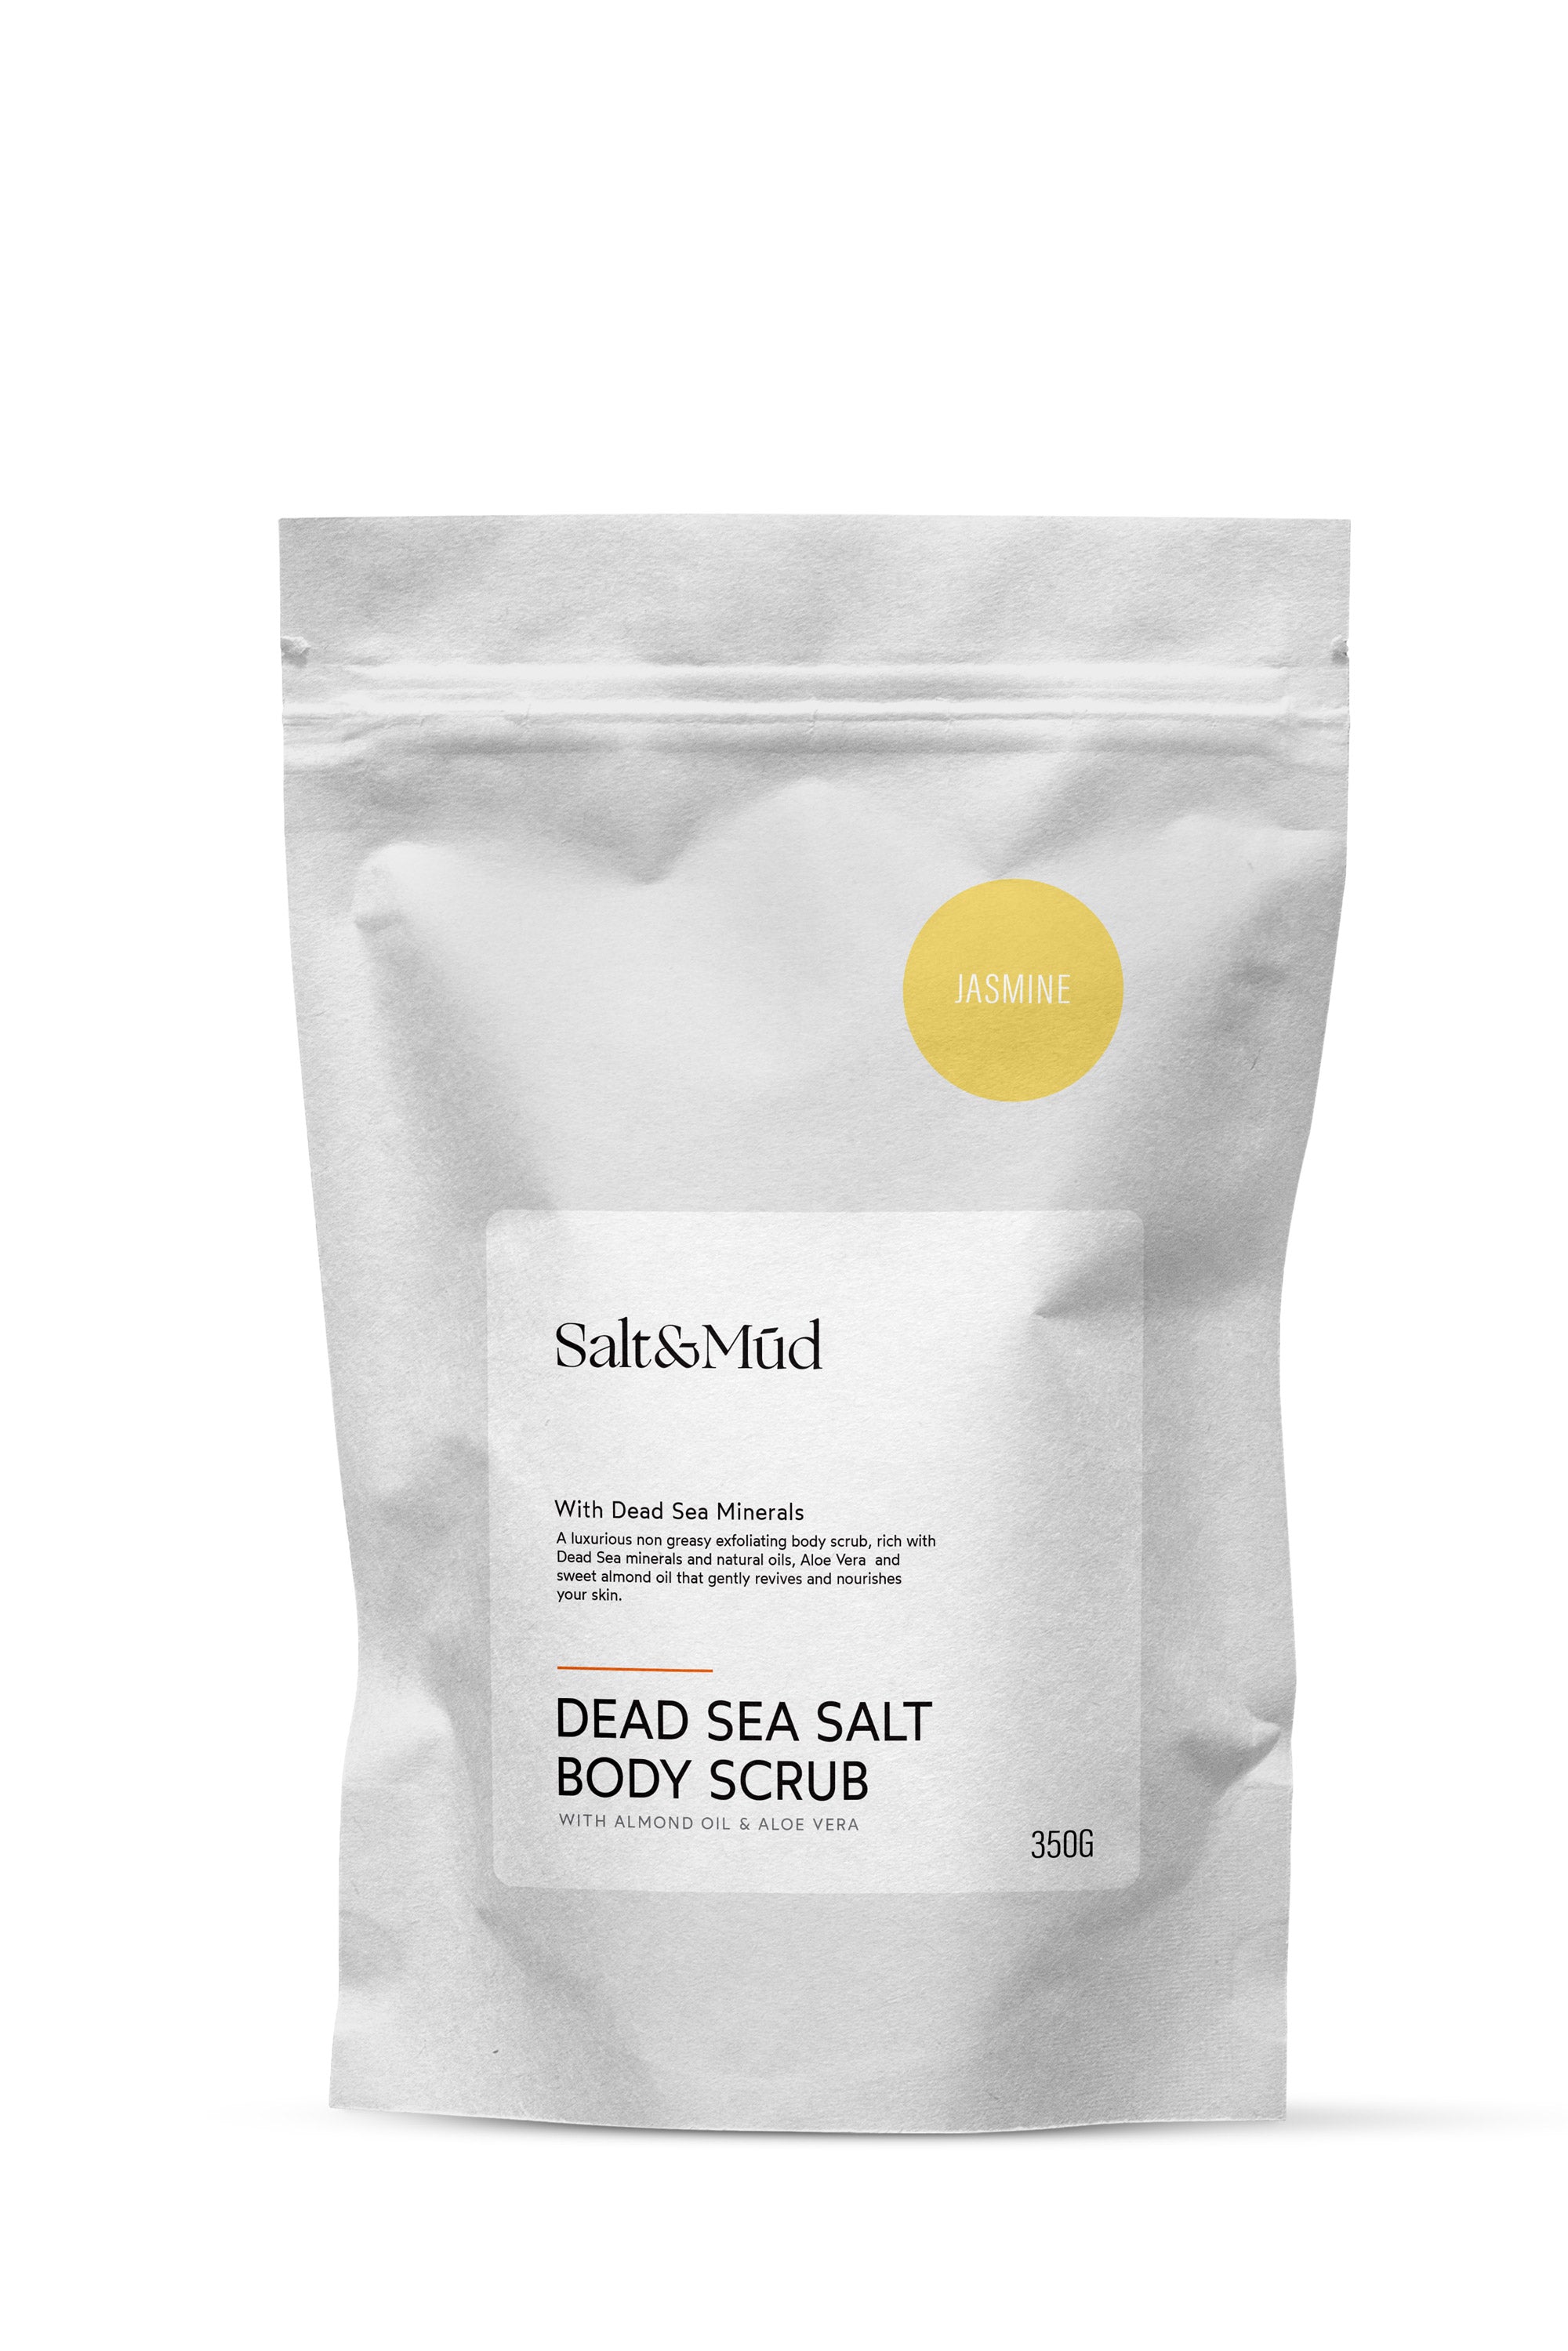 Dead Sea Salt Body Scrub Jasmine 350G